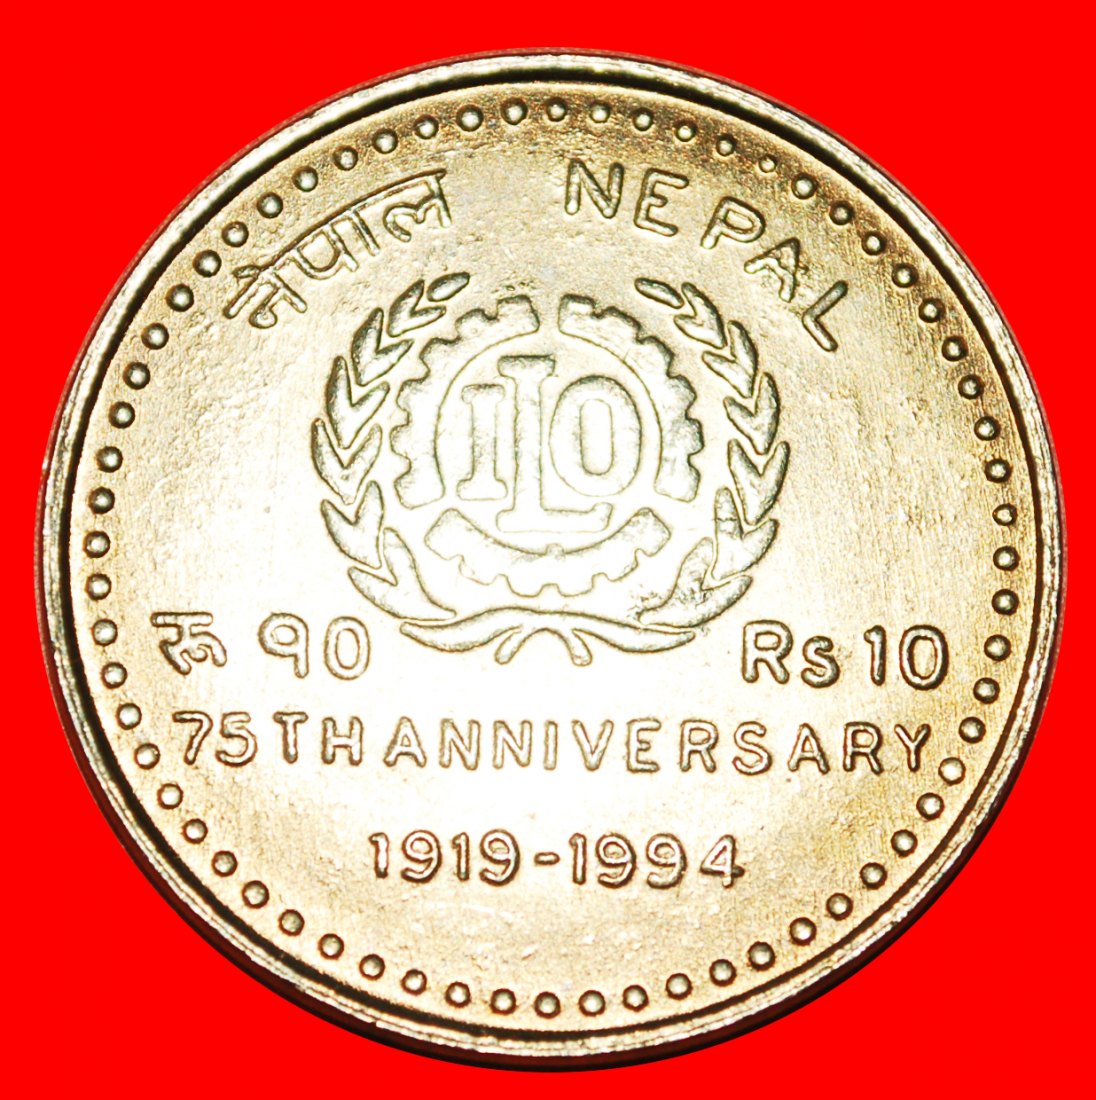  * WORLD OF WORK ILO 1919-1994: NEPAL★10 RUPEES 2051 UNC MINT LUSTRE★UNCOMMON★LOW START ★ NO RESERVE!   